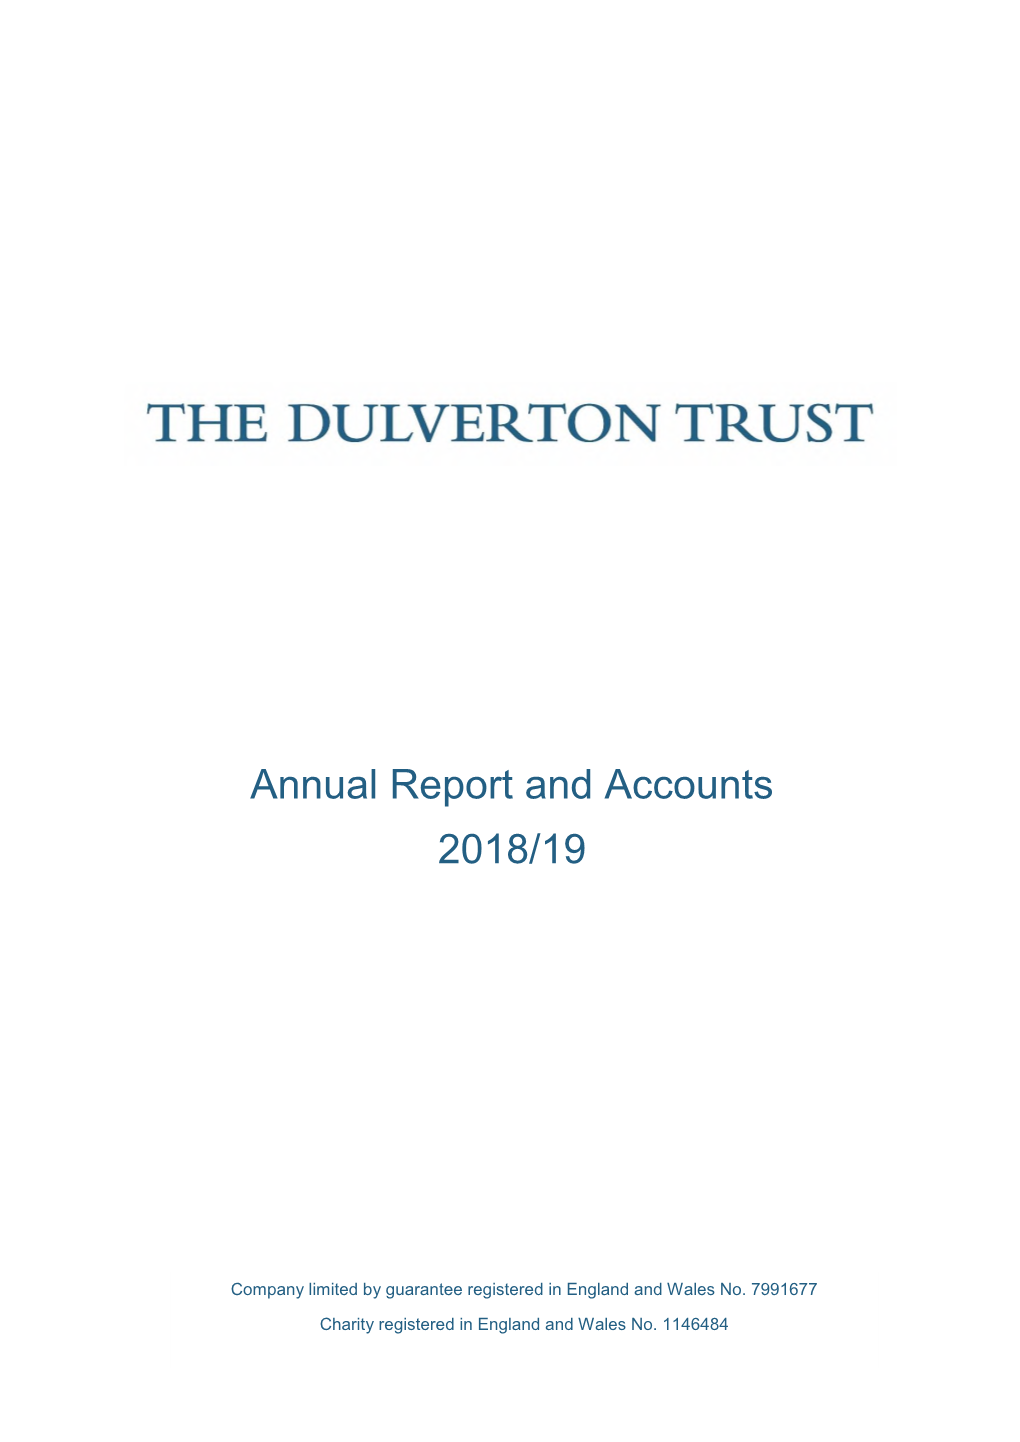 Dulverton Trust Annual Report and Accounts 2018/19